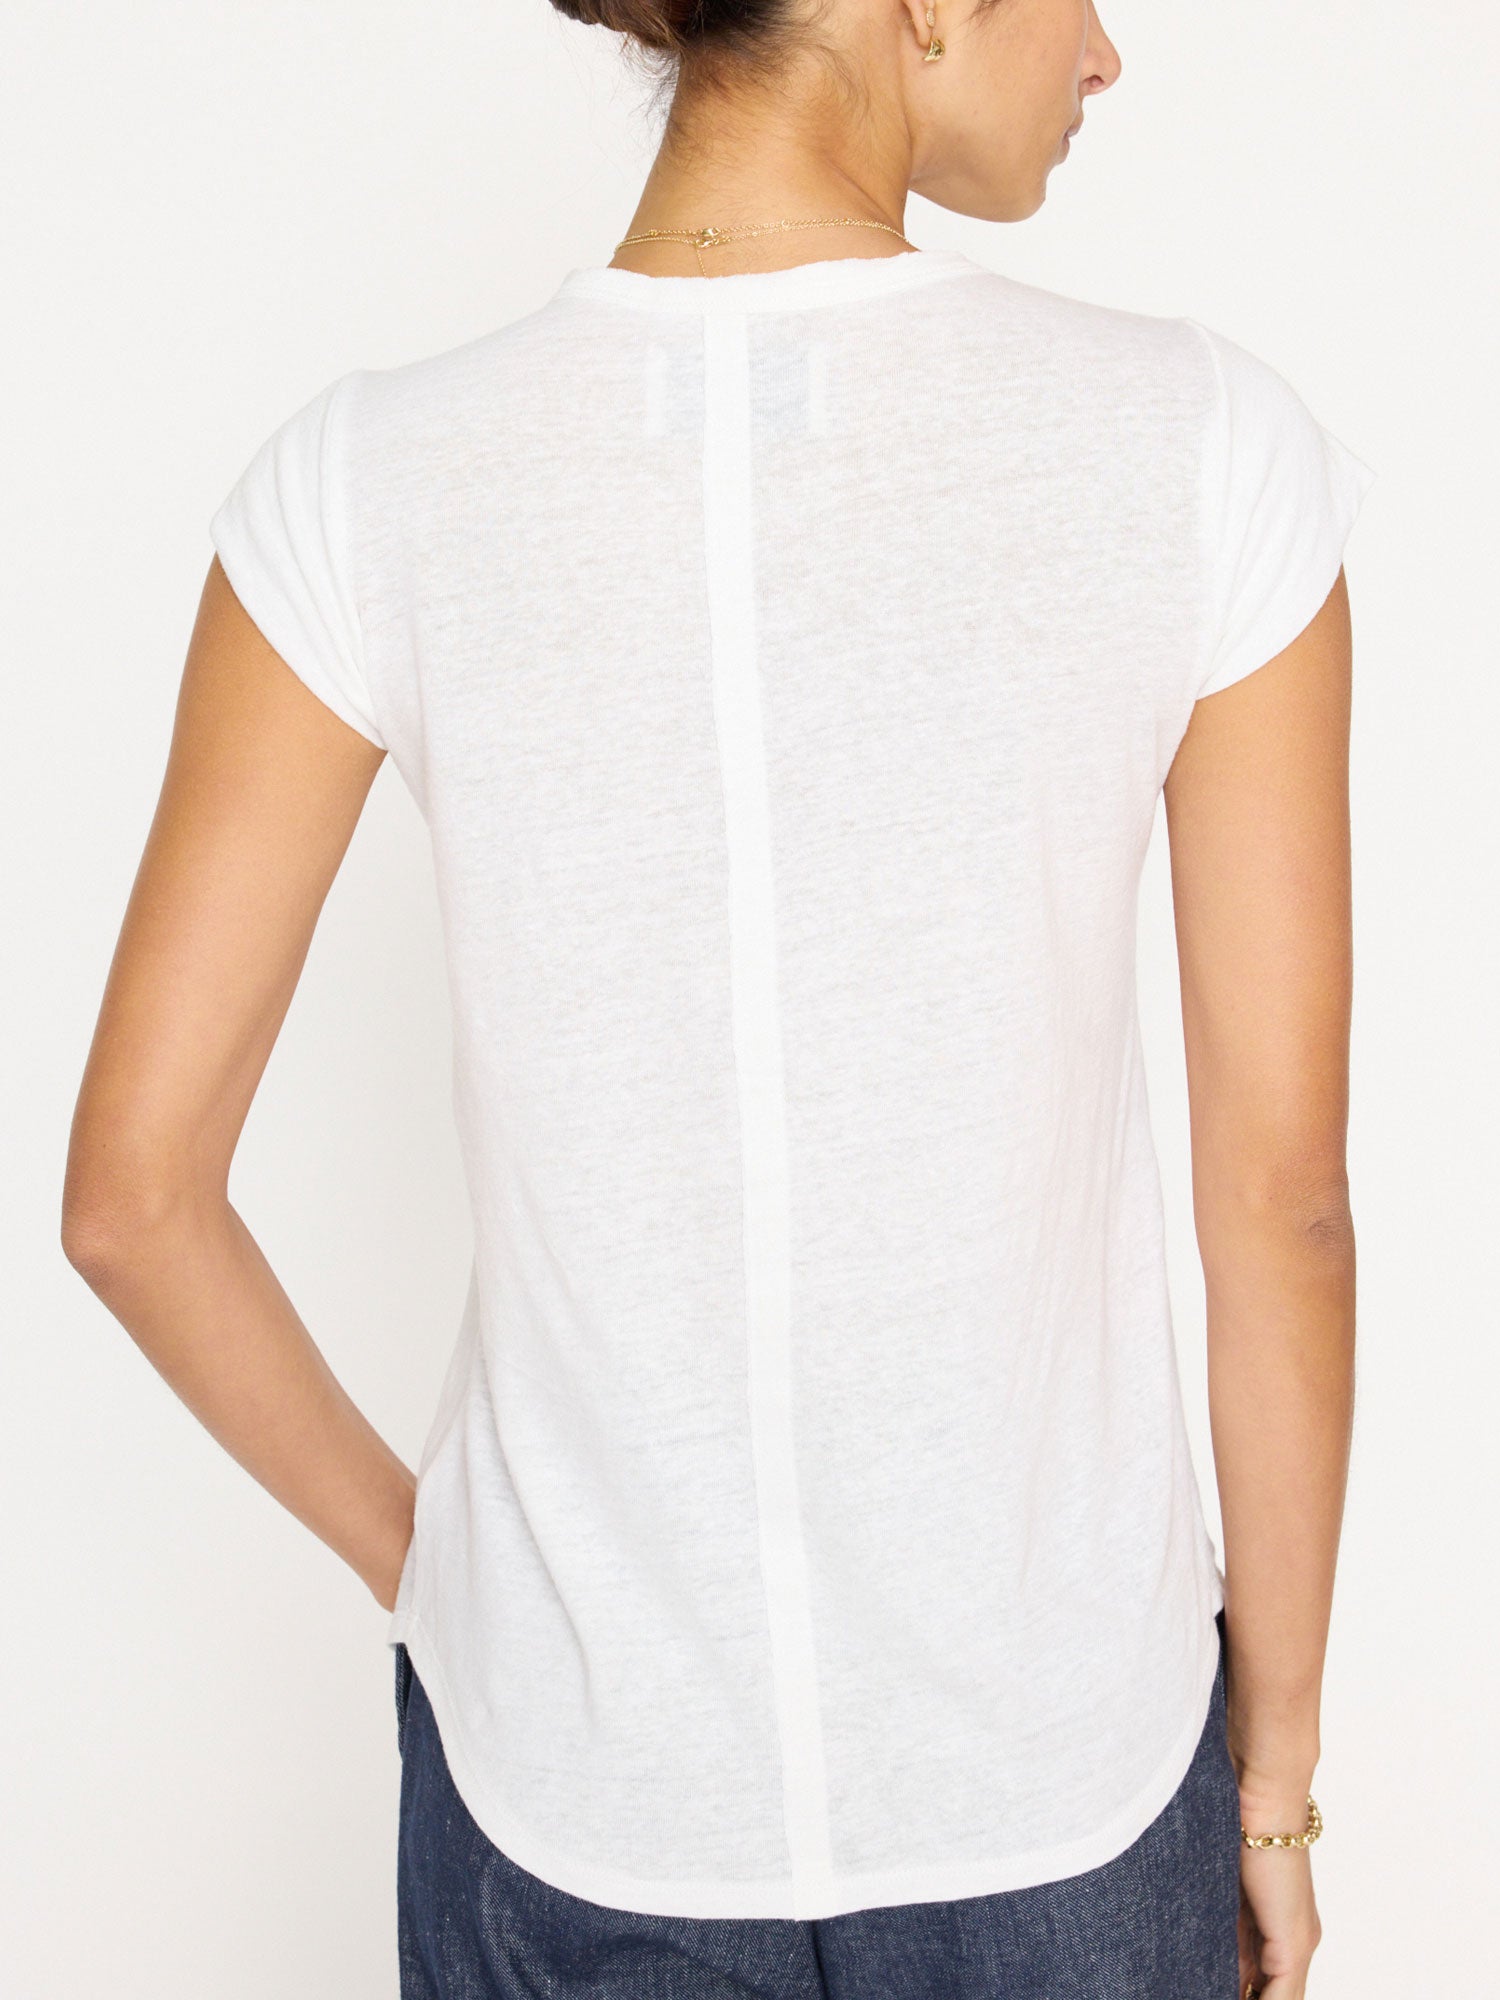 Lane white scoop neckline t-shirt back view 